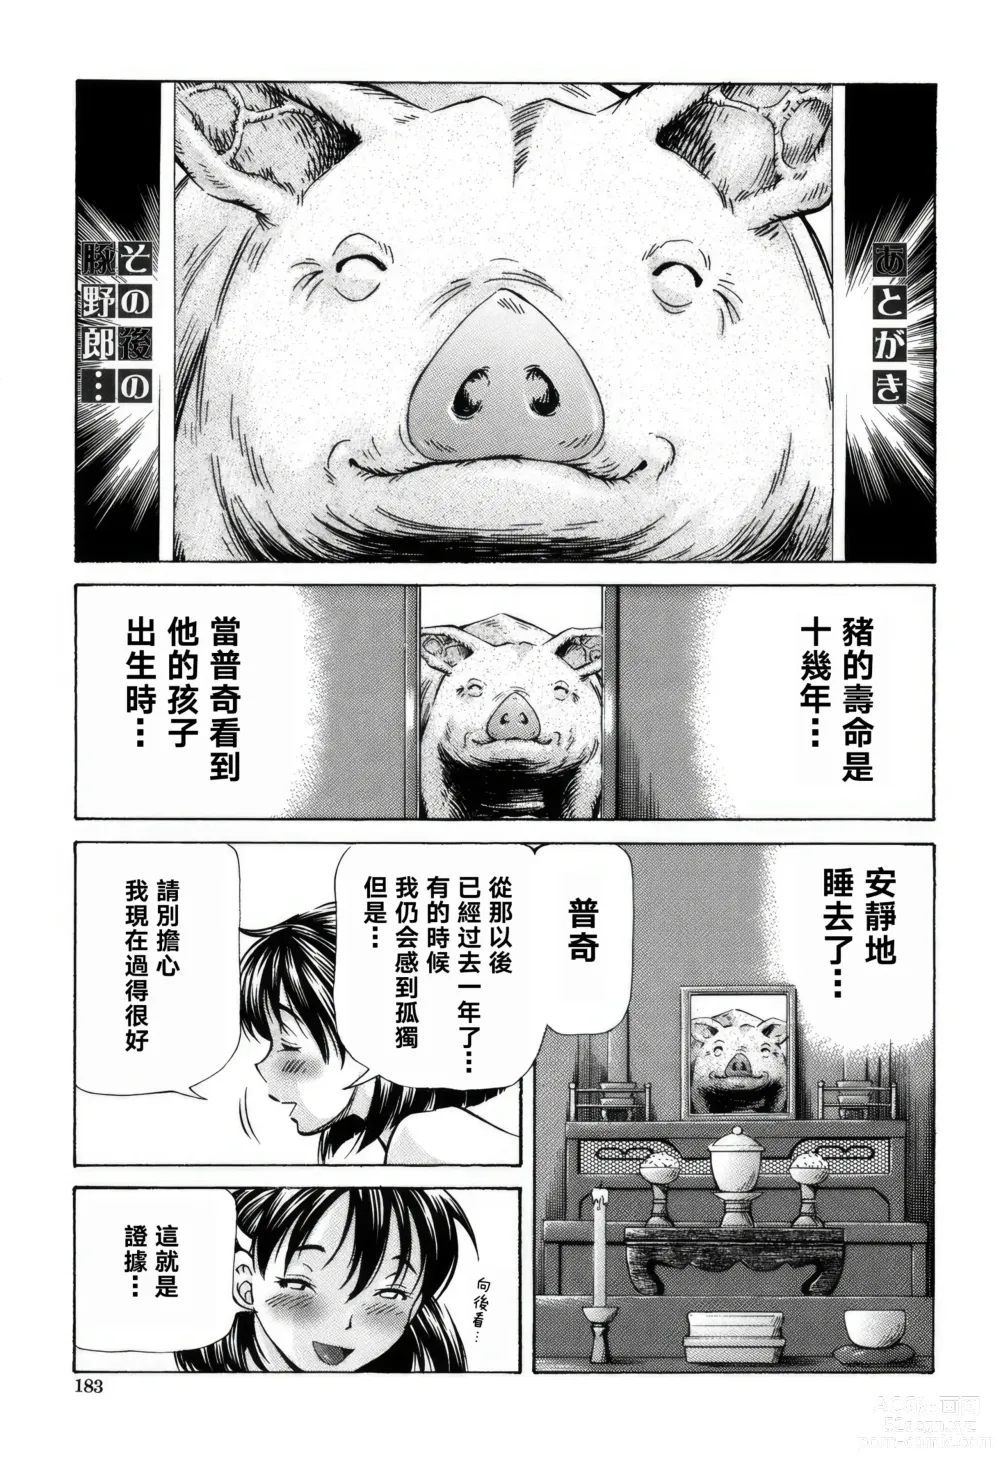 Page 183 of manga Cross-Breeding